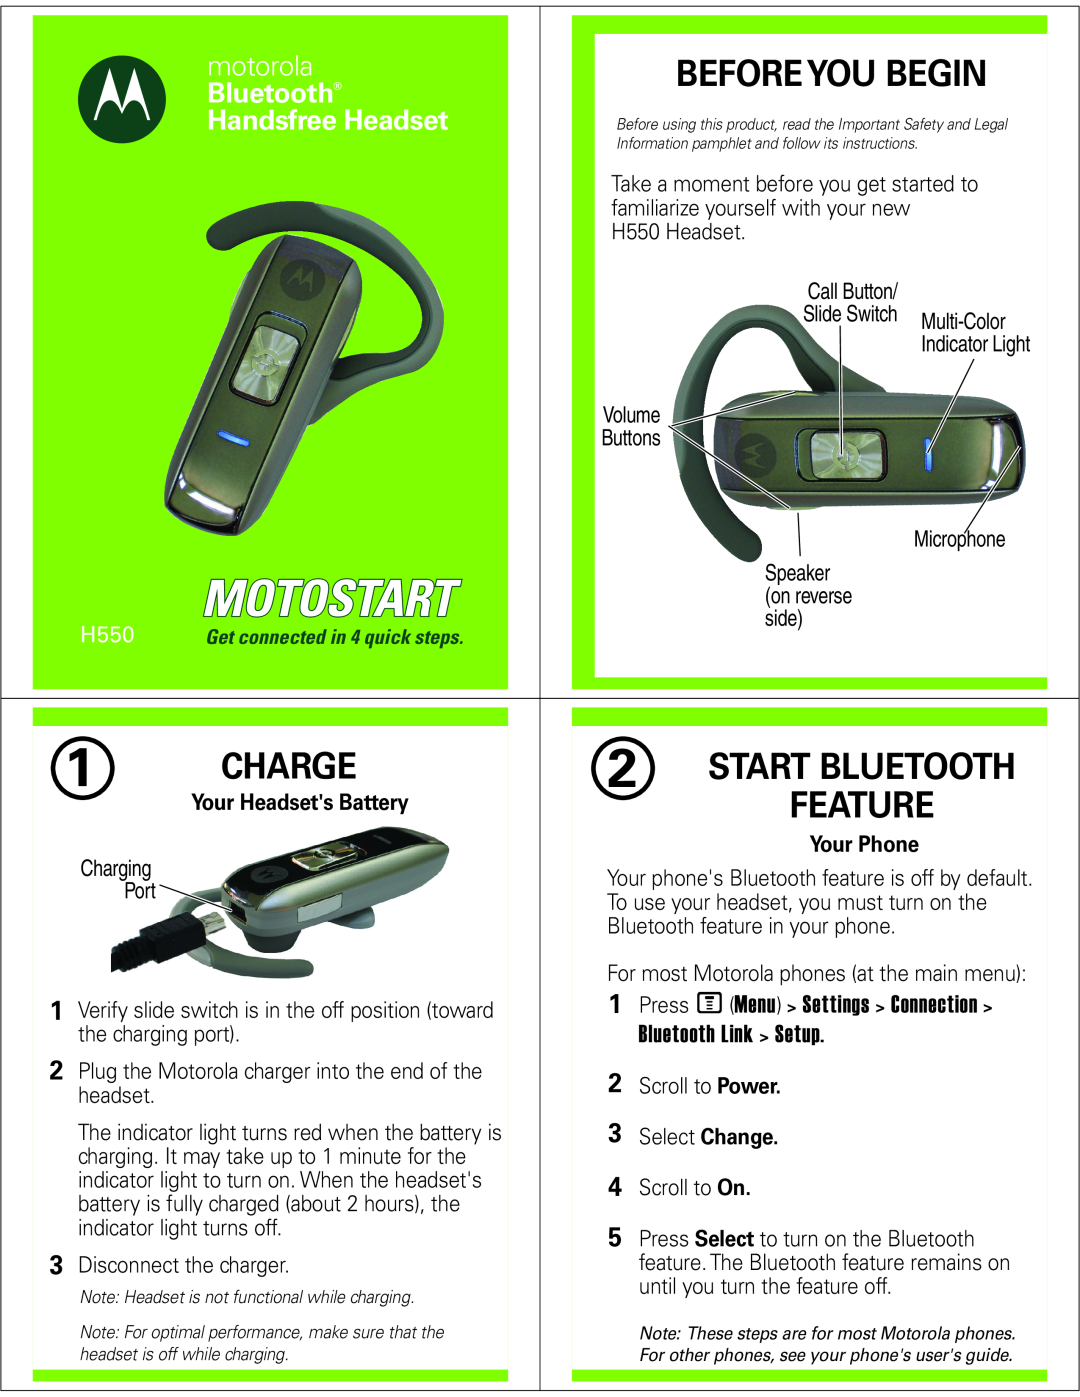 Motorola H550 manual Charge, Before You Begin, Start Bluetooth, Feature, Press MMenu Settings Connection, motorola 